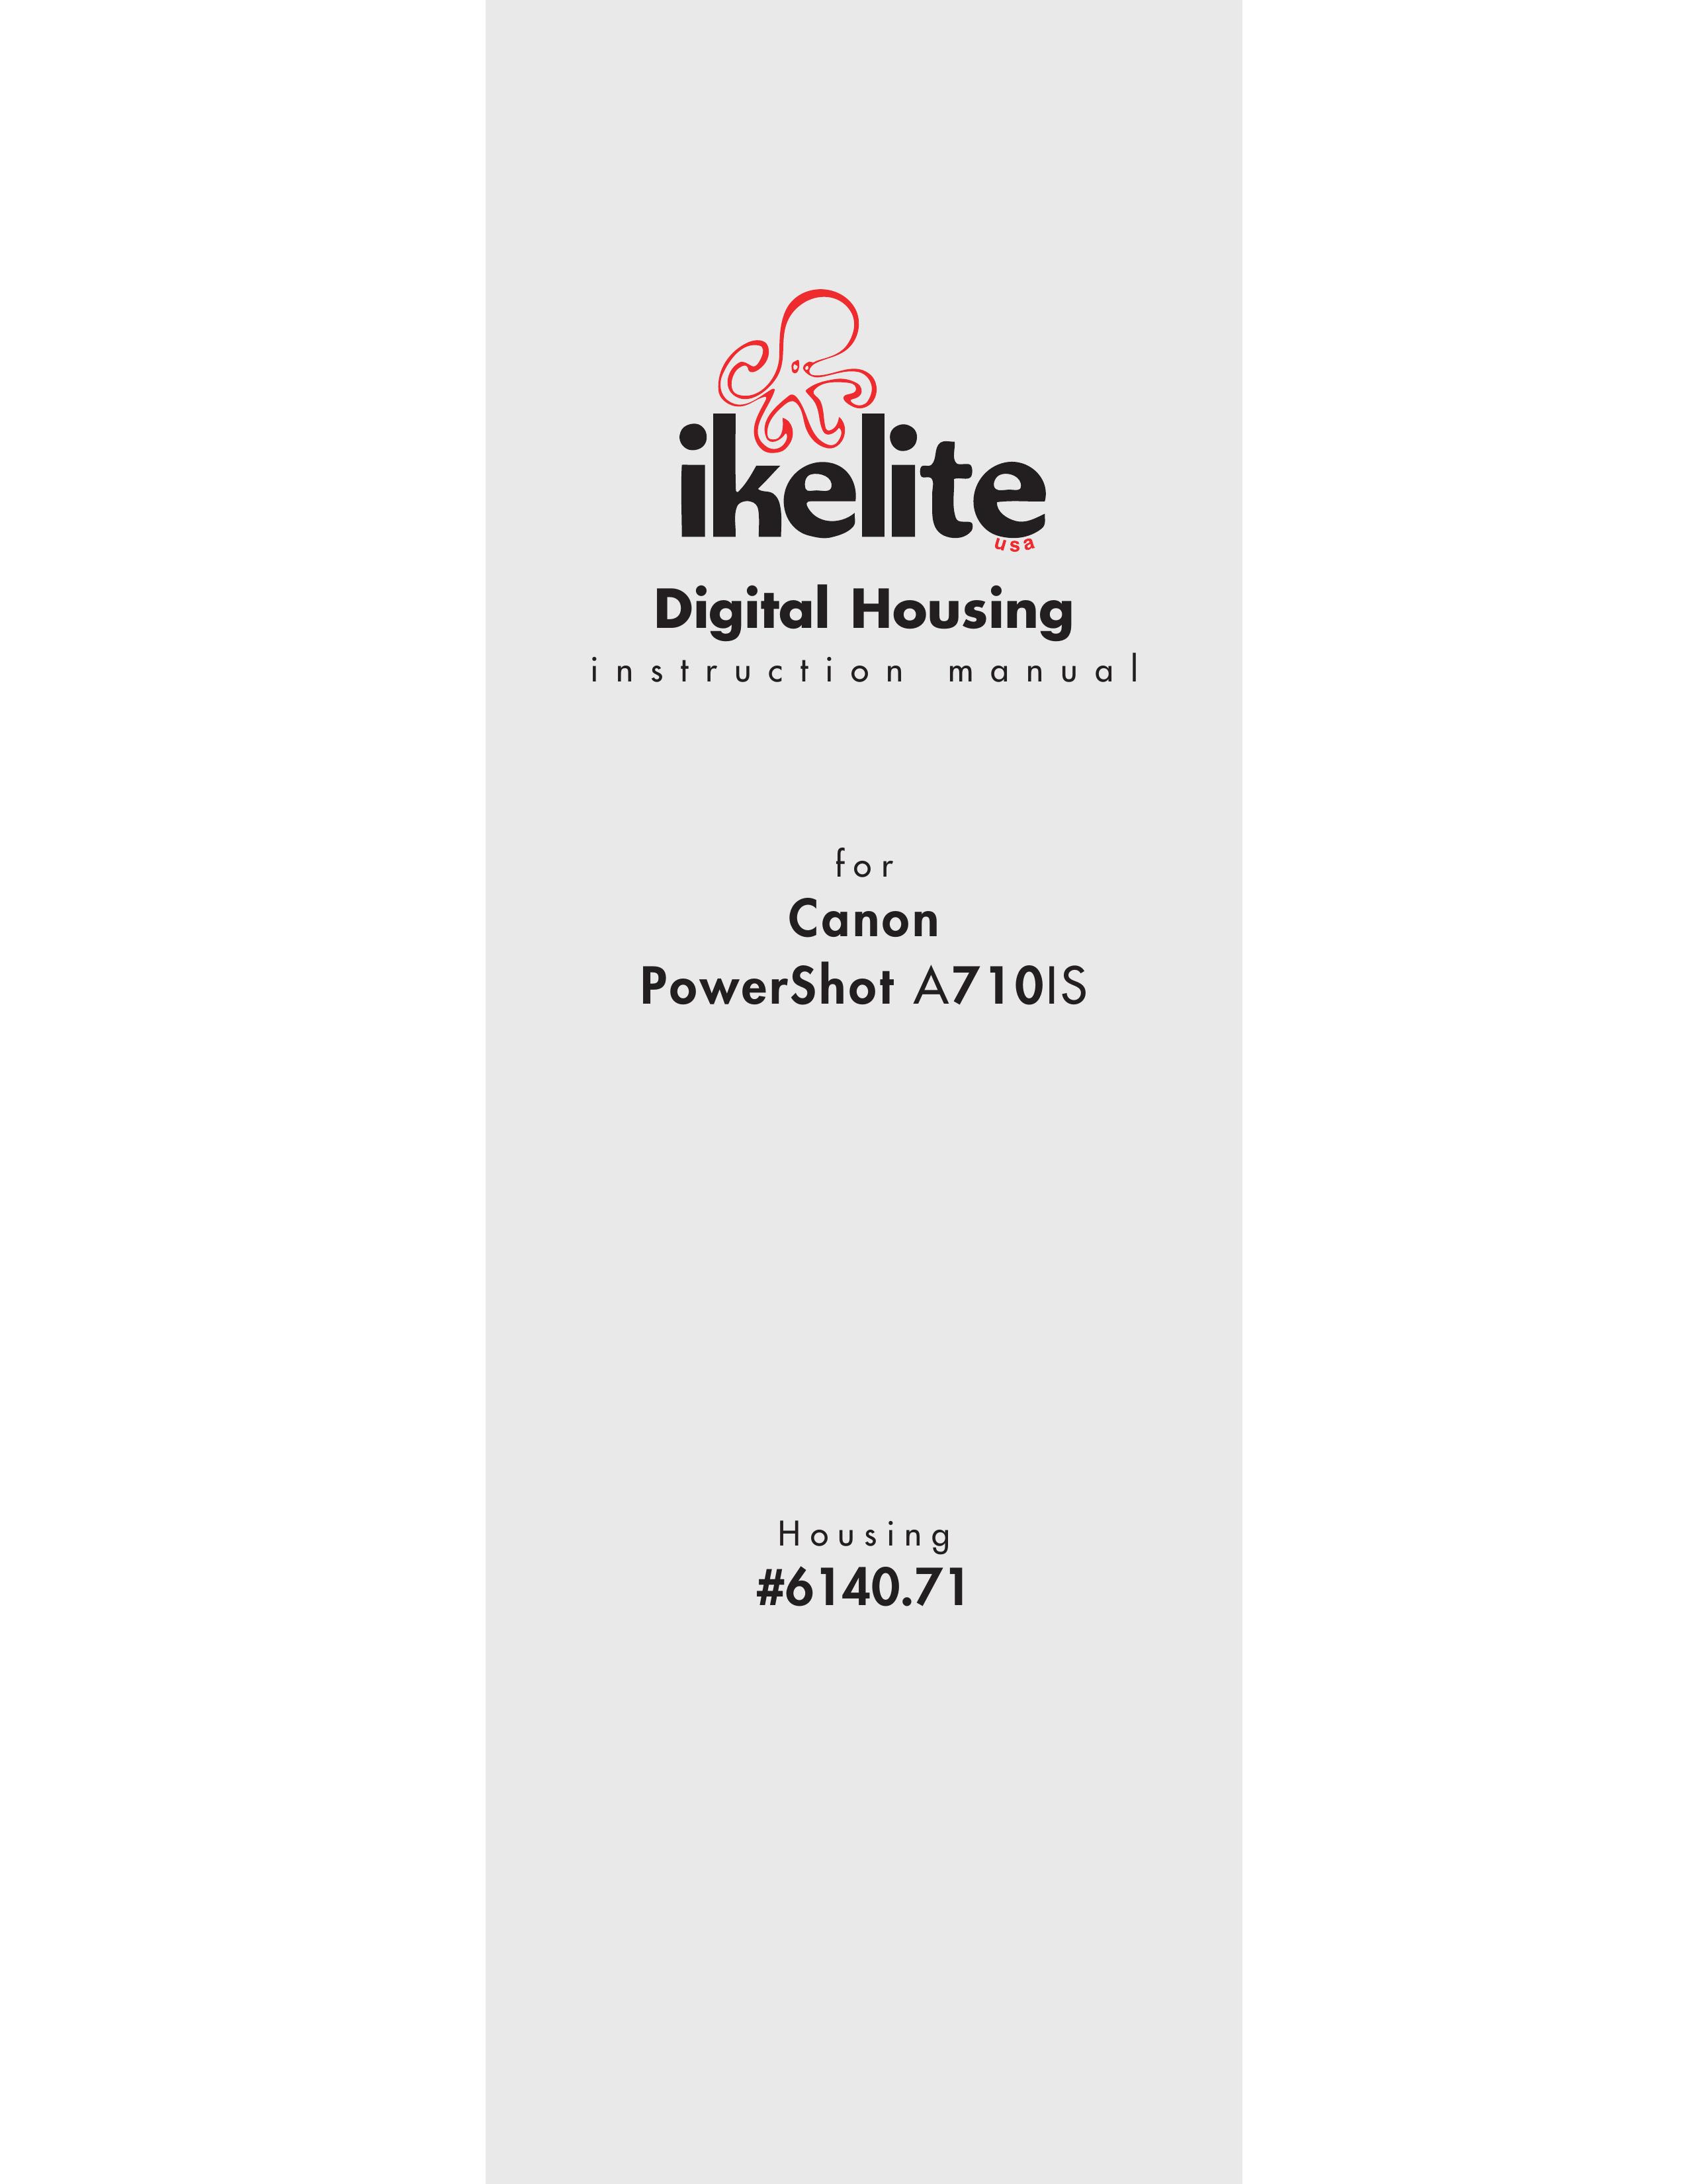 Ikelite A710IS Digital Camera User Manual